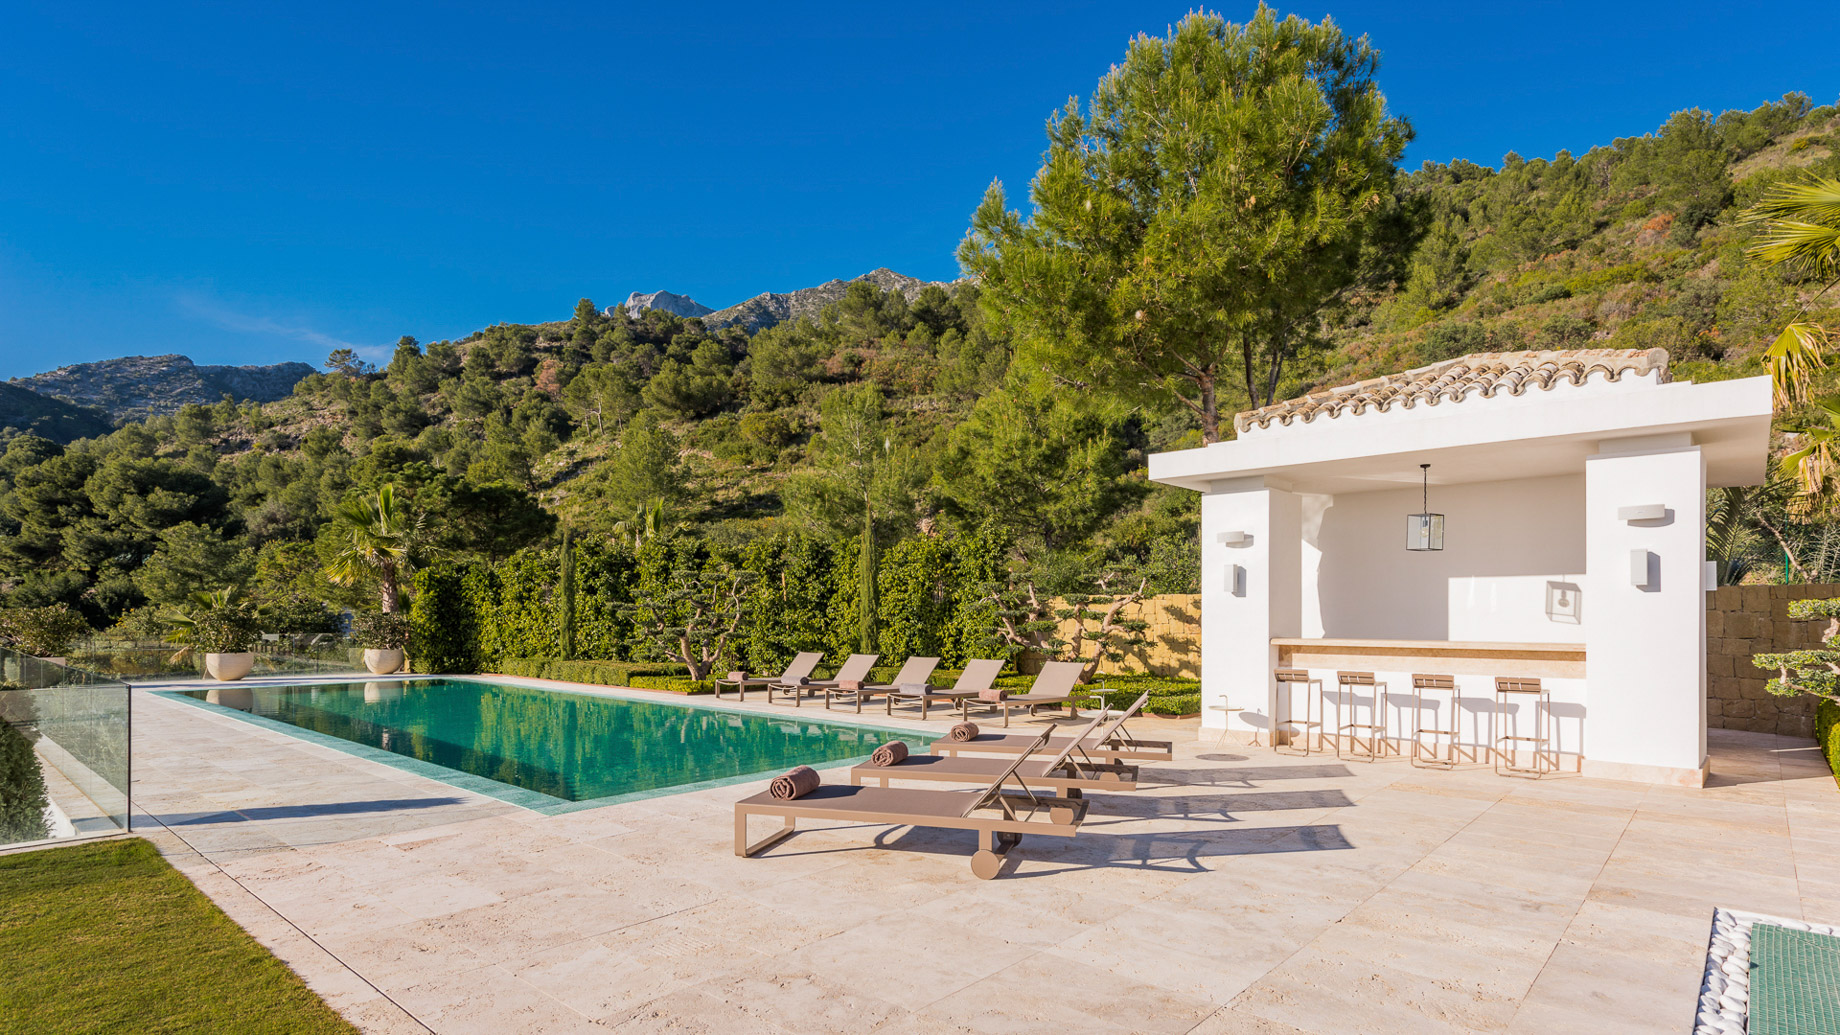 Villa Camojan Luxury Residence - Cascada de Camojan, Marbella, Spain - Exterior Pool View